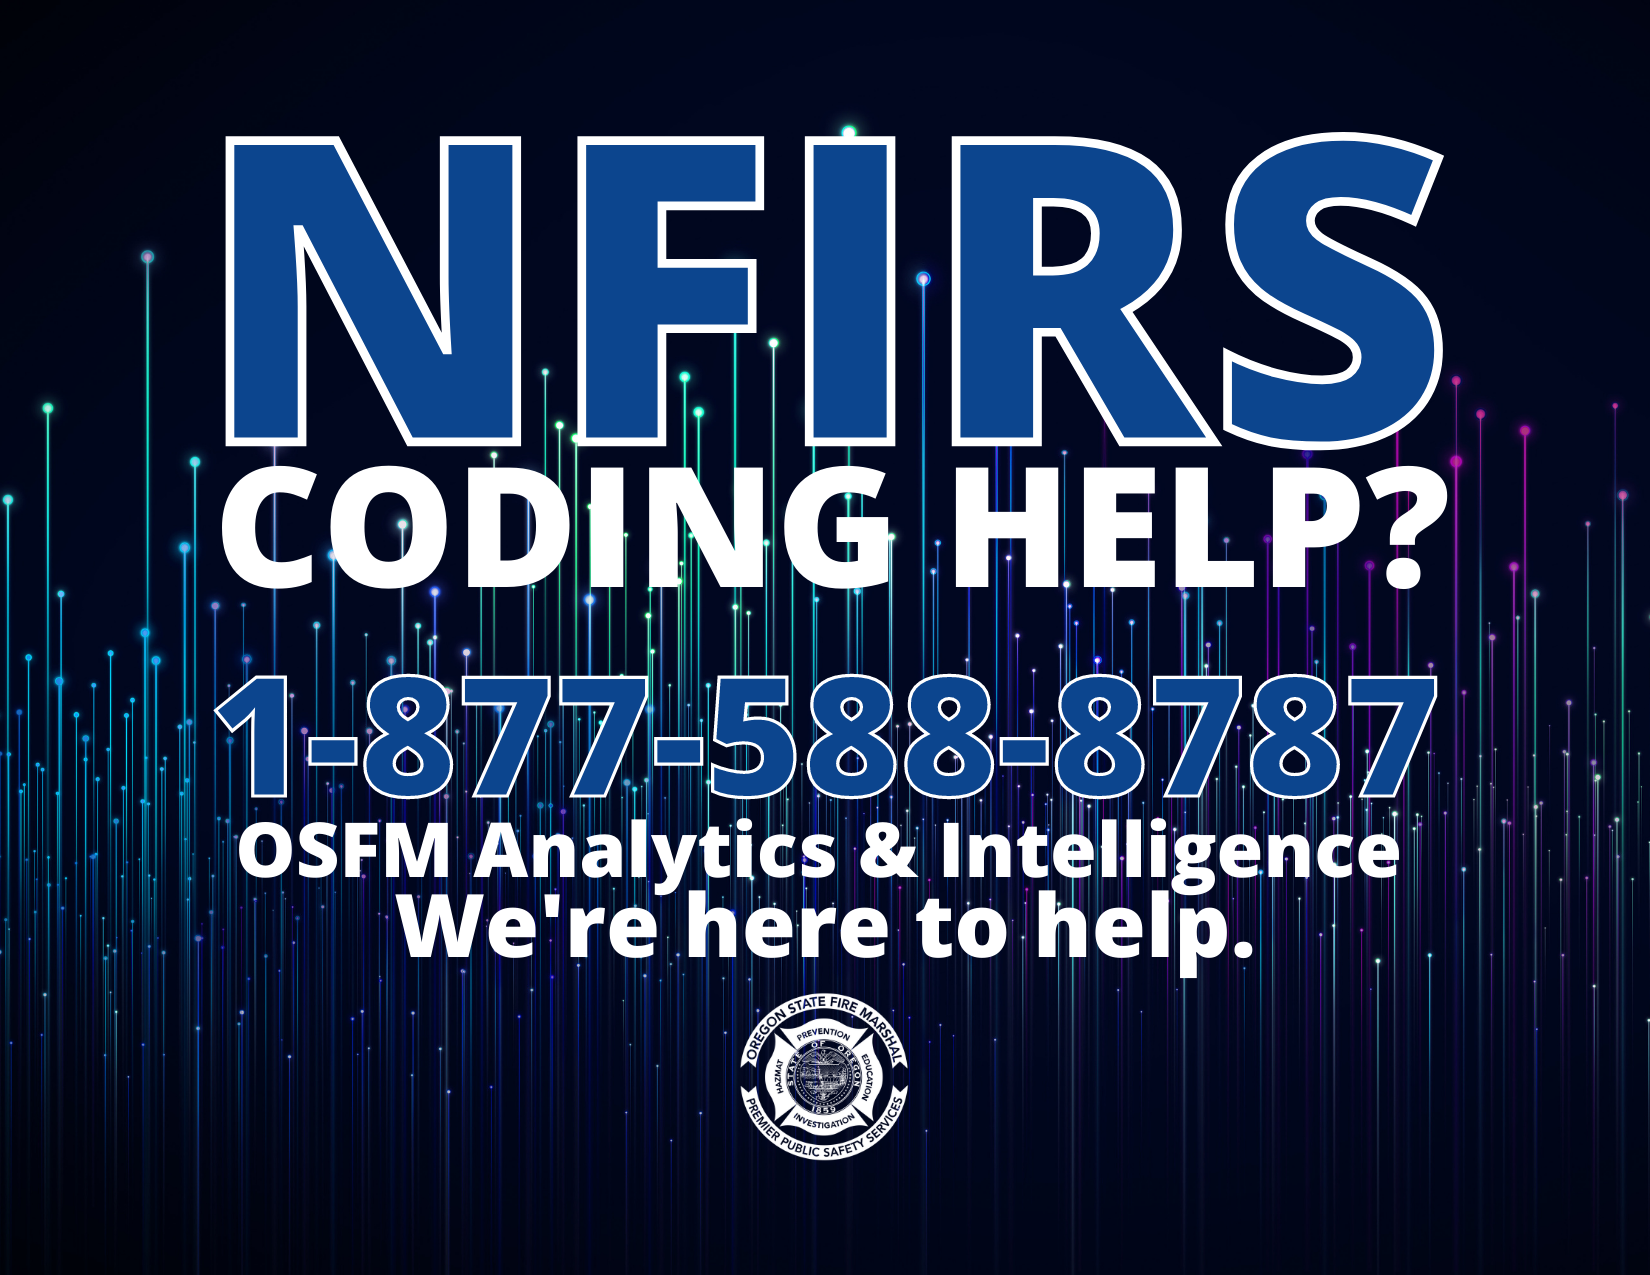 NFIRS Coding Help